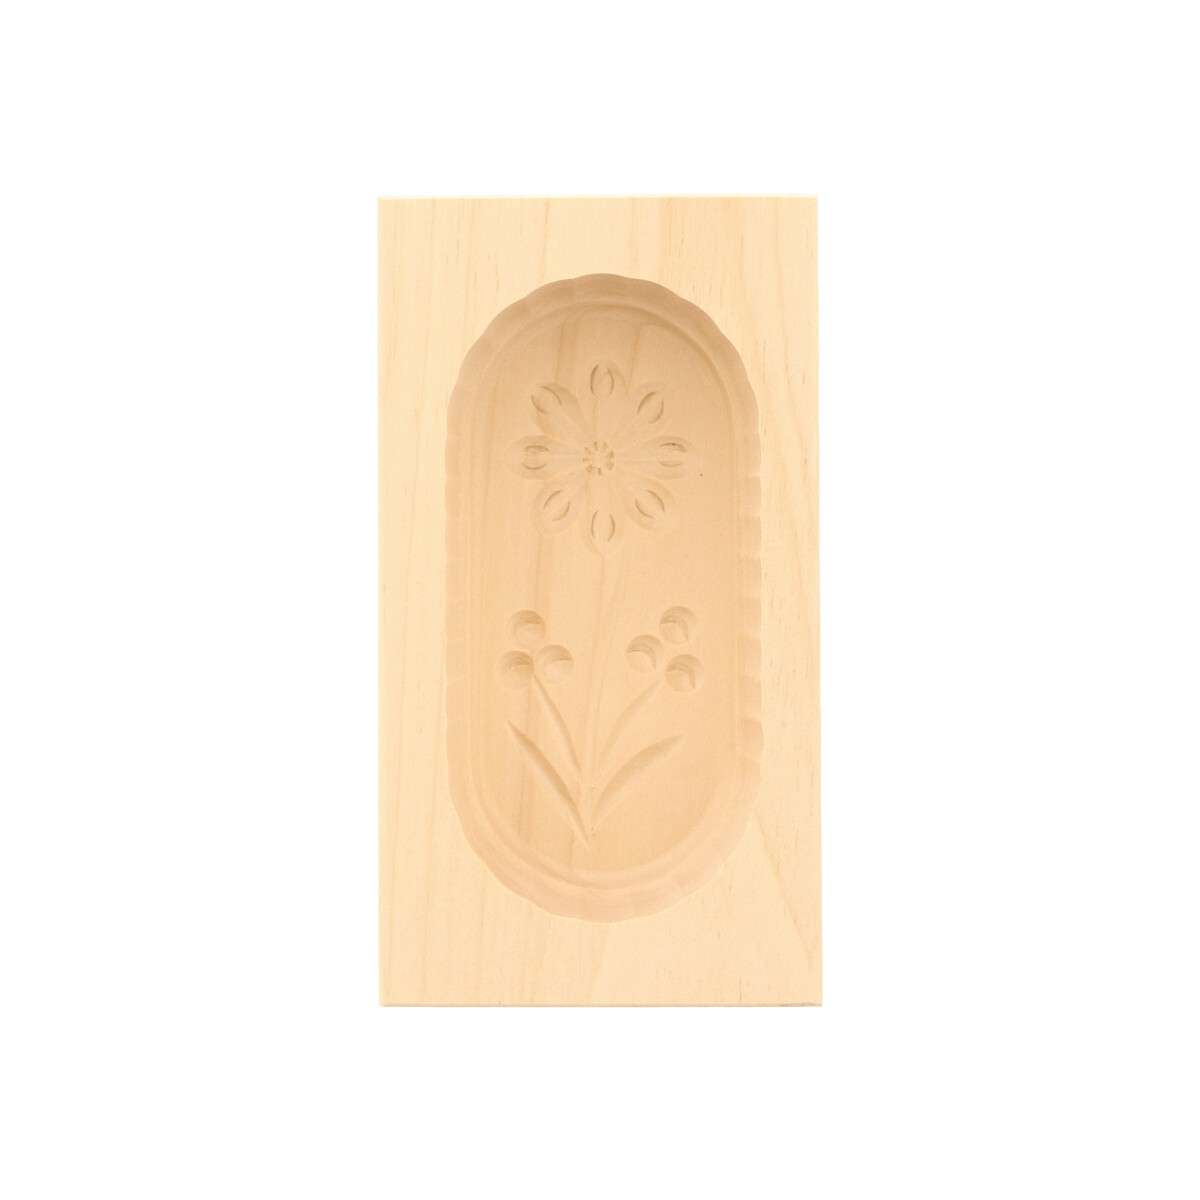 Butterform, eckig, 125 Gramm, Margerite aus Holz 14 cm